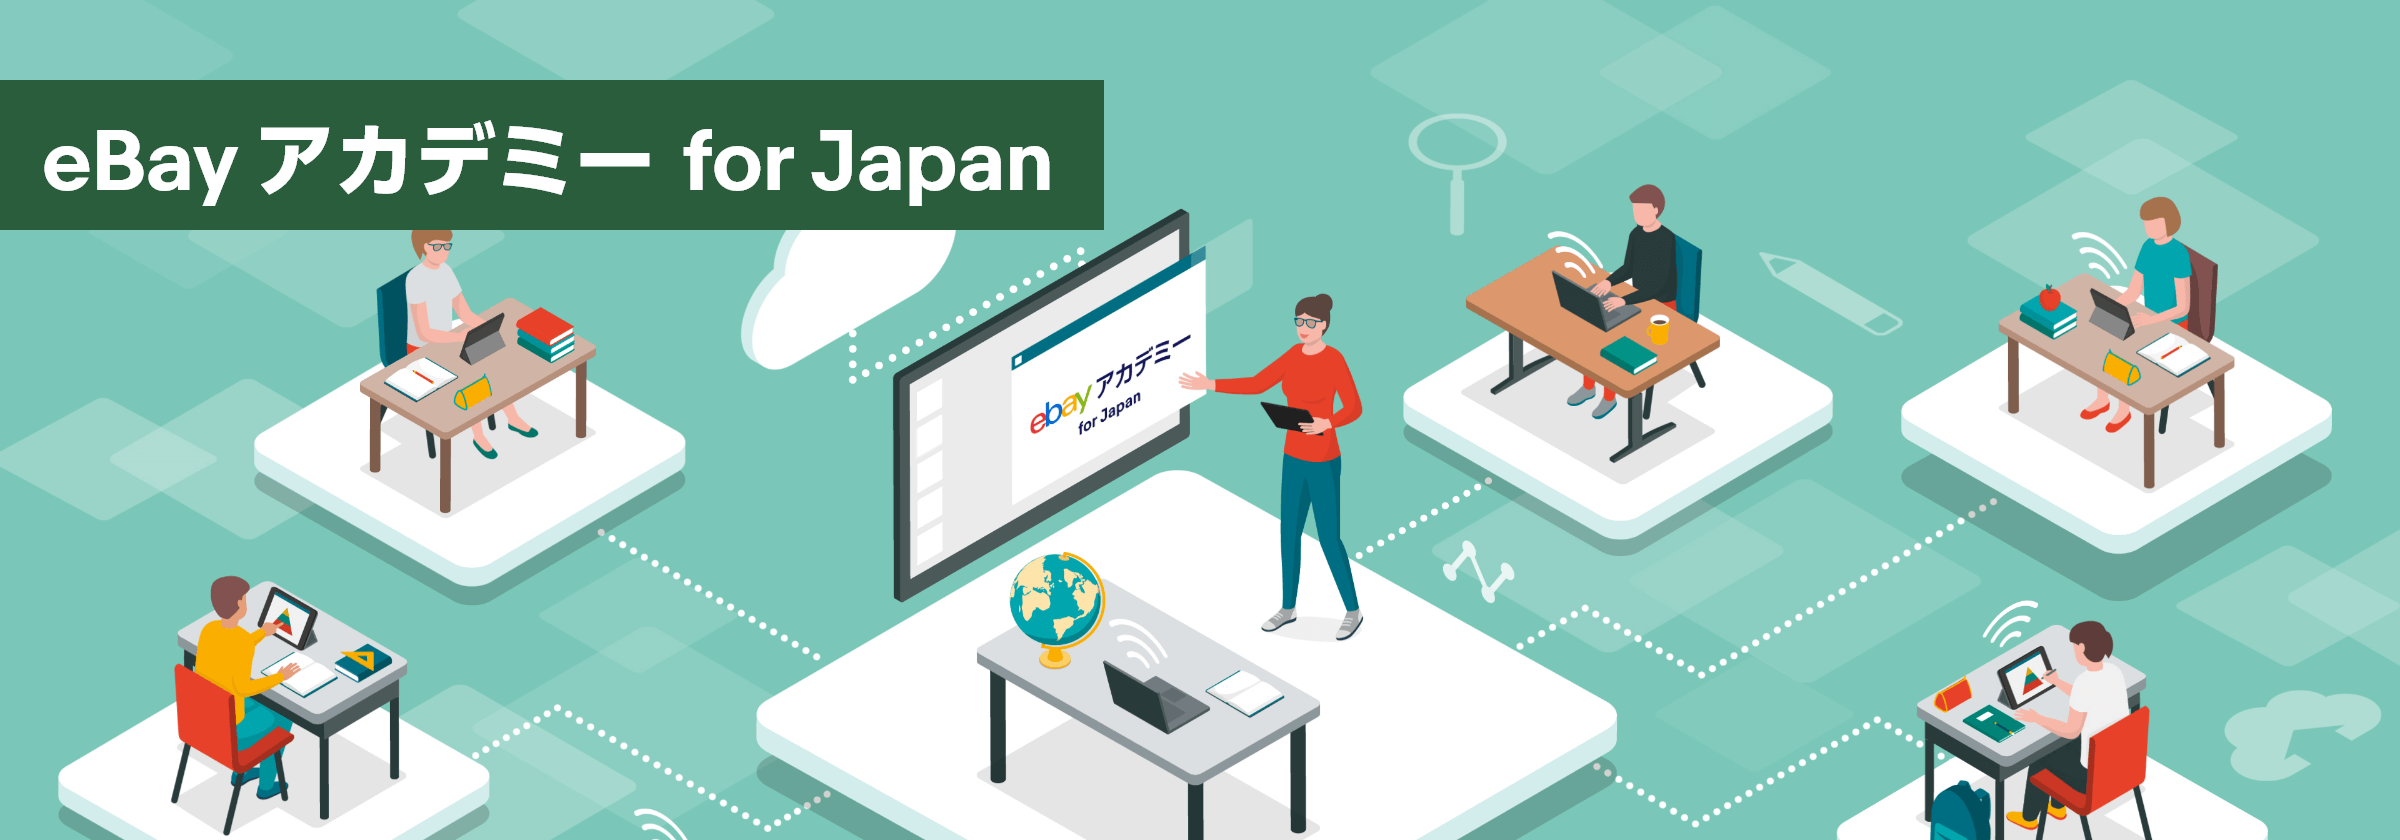 eBay アカデミー for Japan